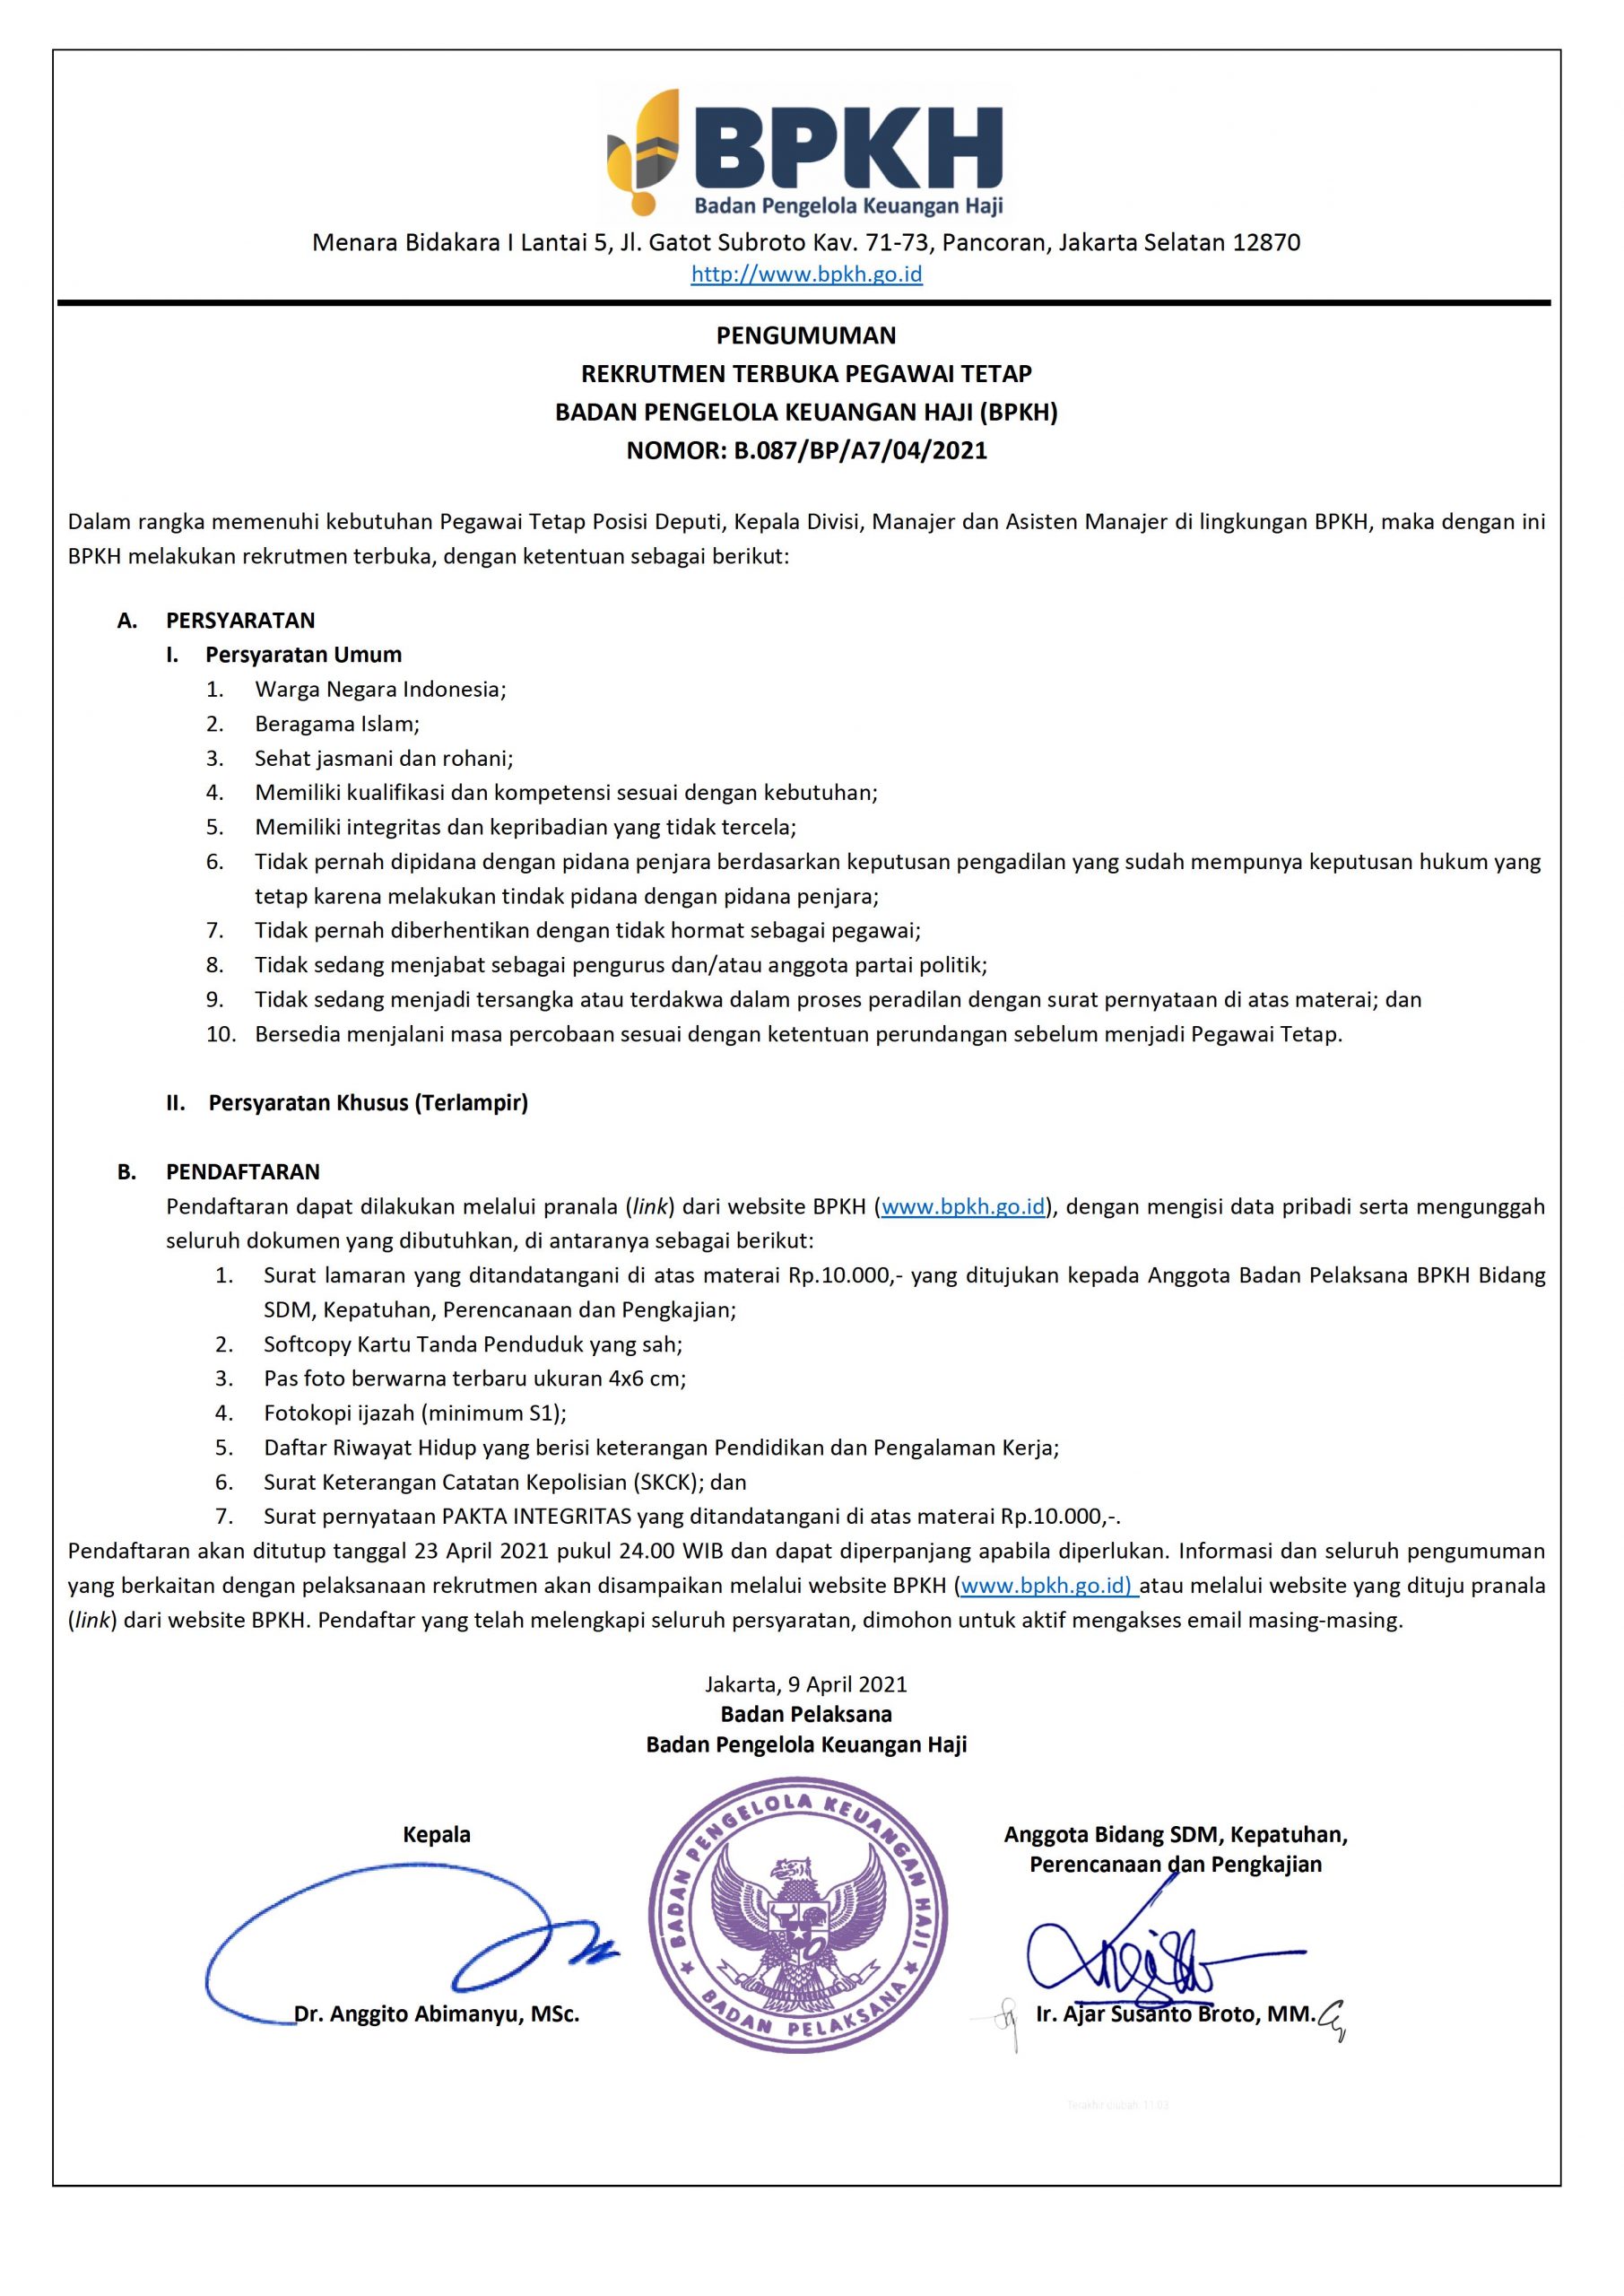 Rekrutmen Terbuka Pegawai Tetap | Badan Pengelola Keuangan Haji (BPKH)